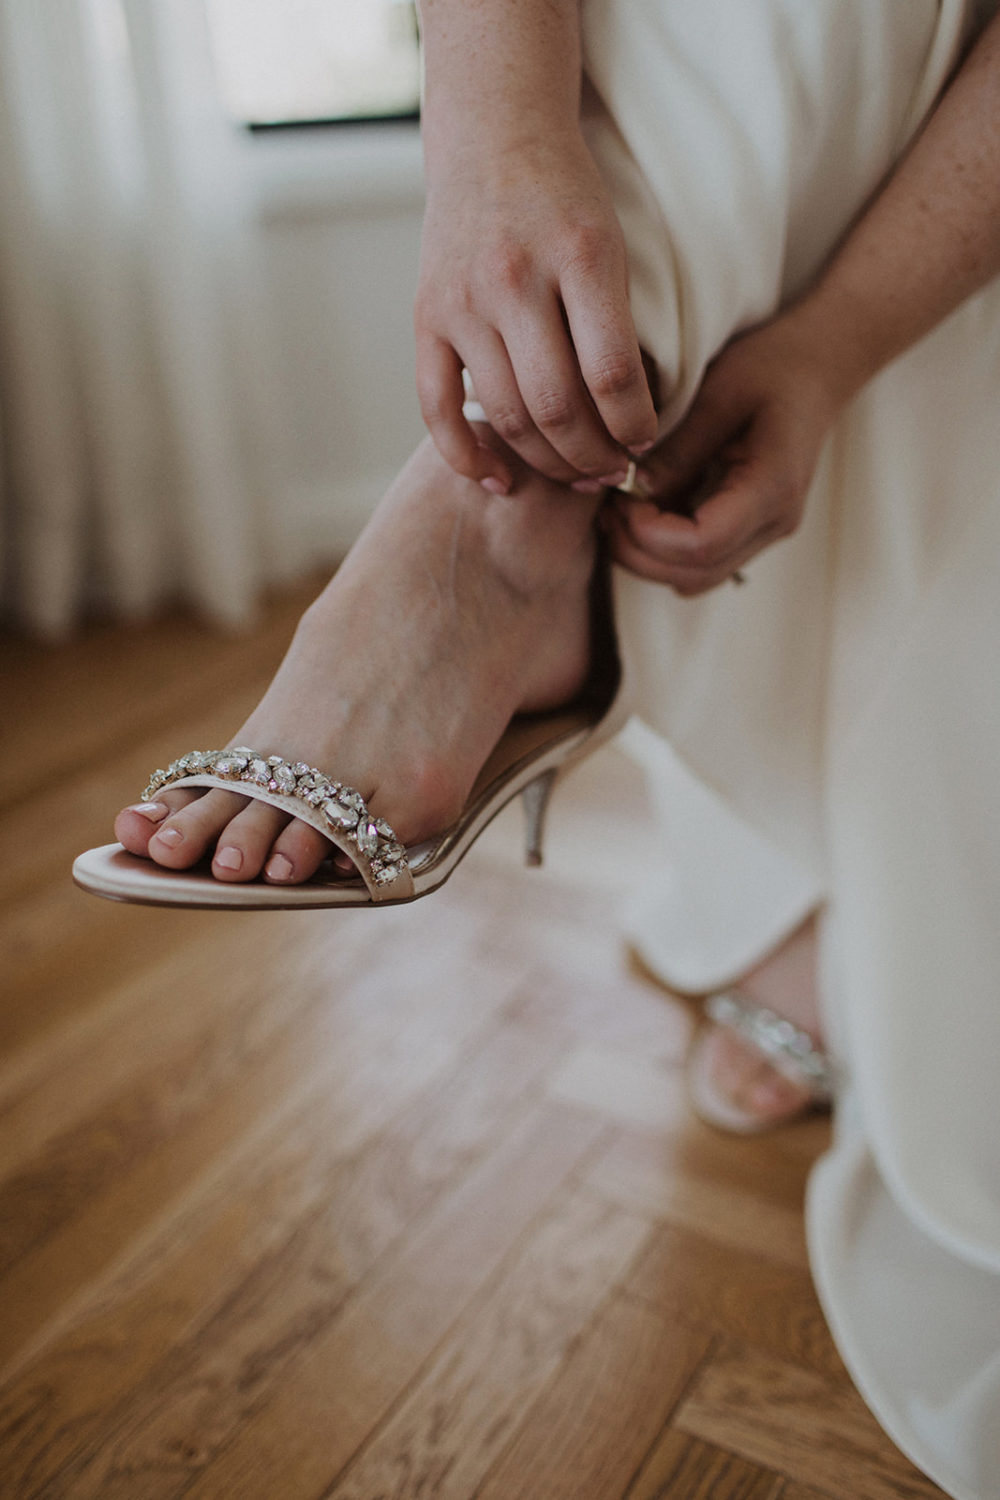 Bride puts on bejeweled wedding shoes